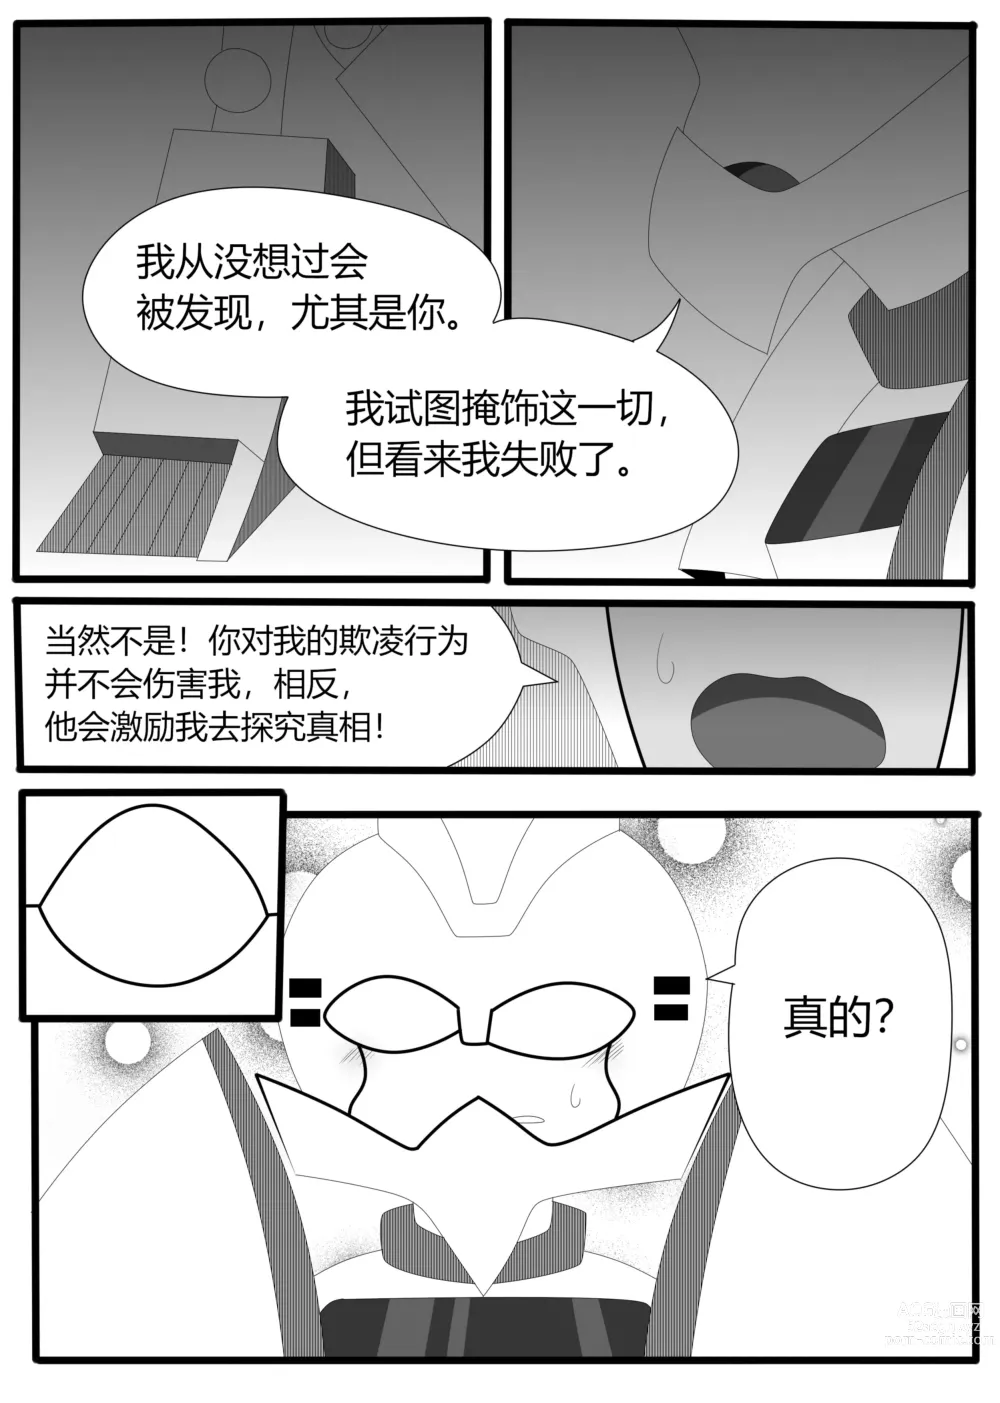 Page 19 of doujinshi Transformers animated doujinshi《MISUNDERSTAND》beewasp R-18